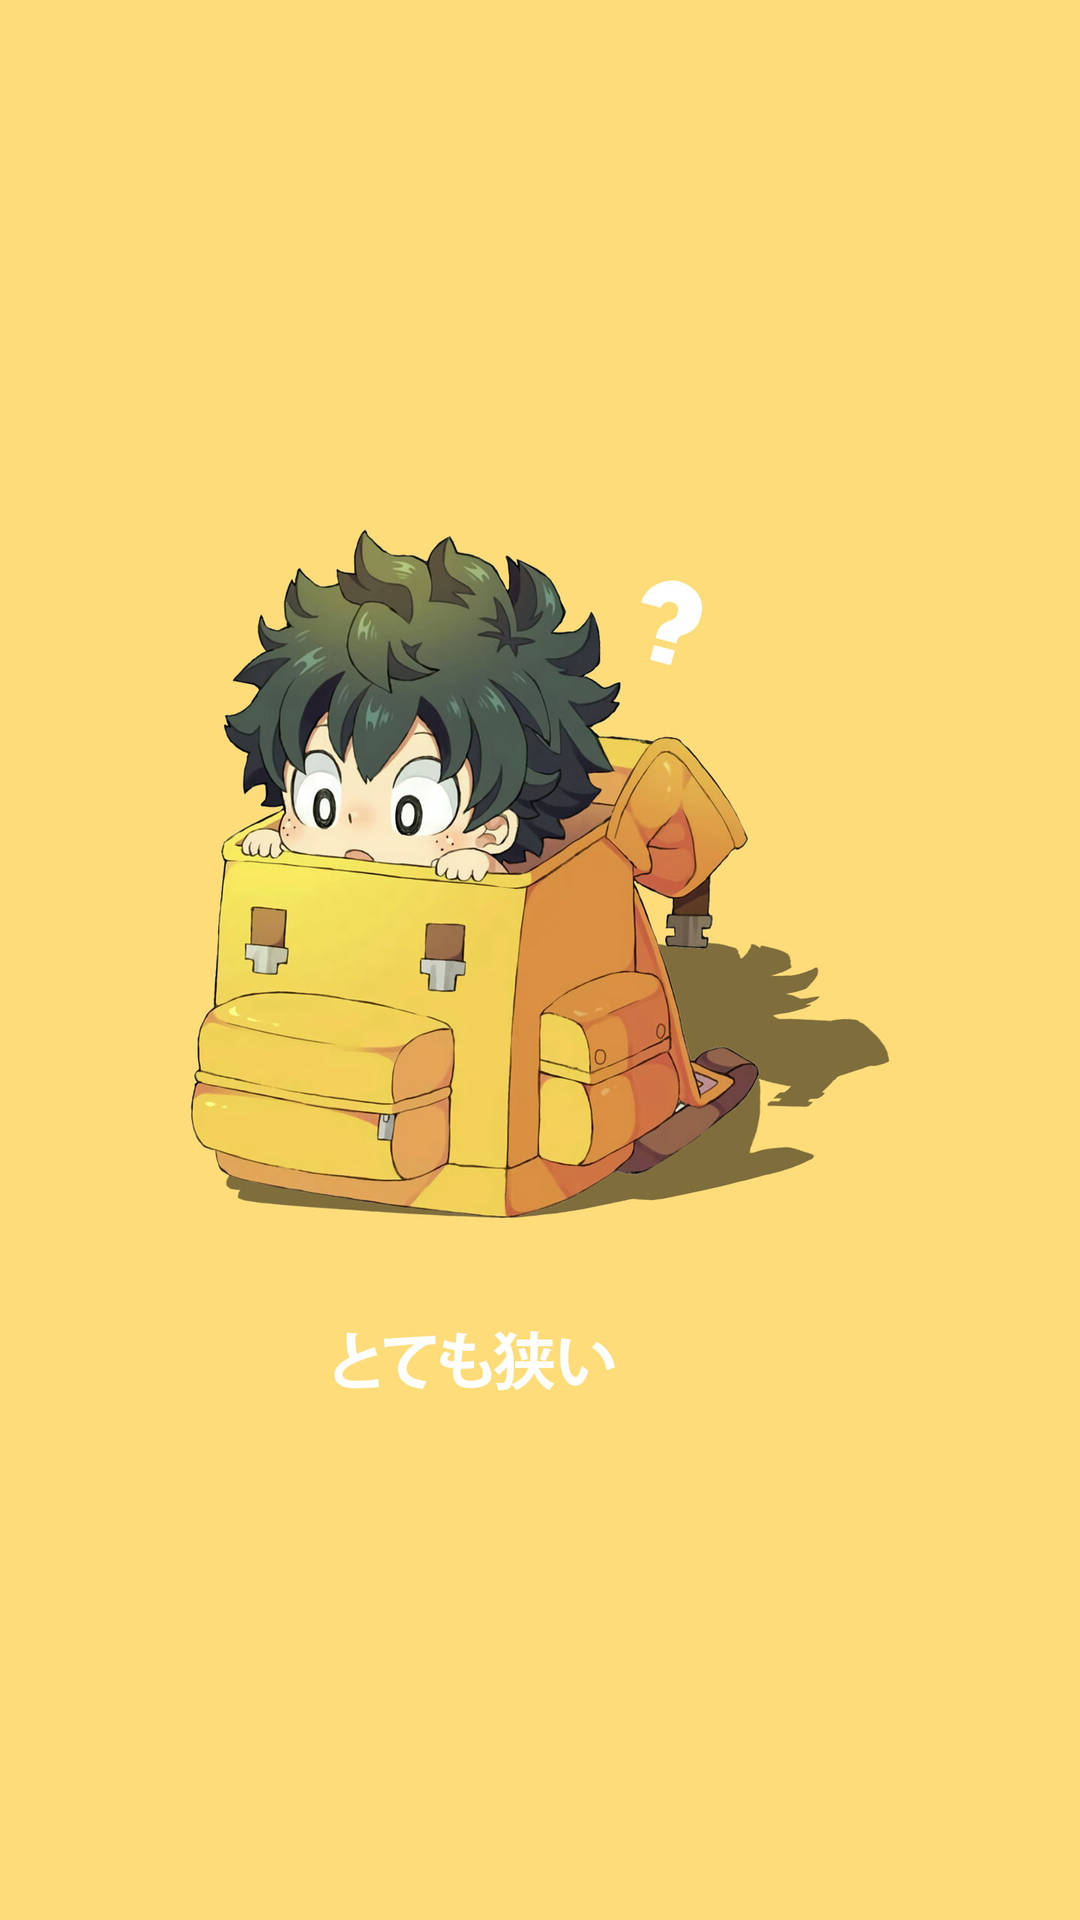 Deku Cute In A Yellow Bag